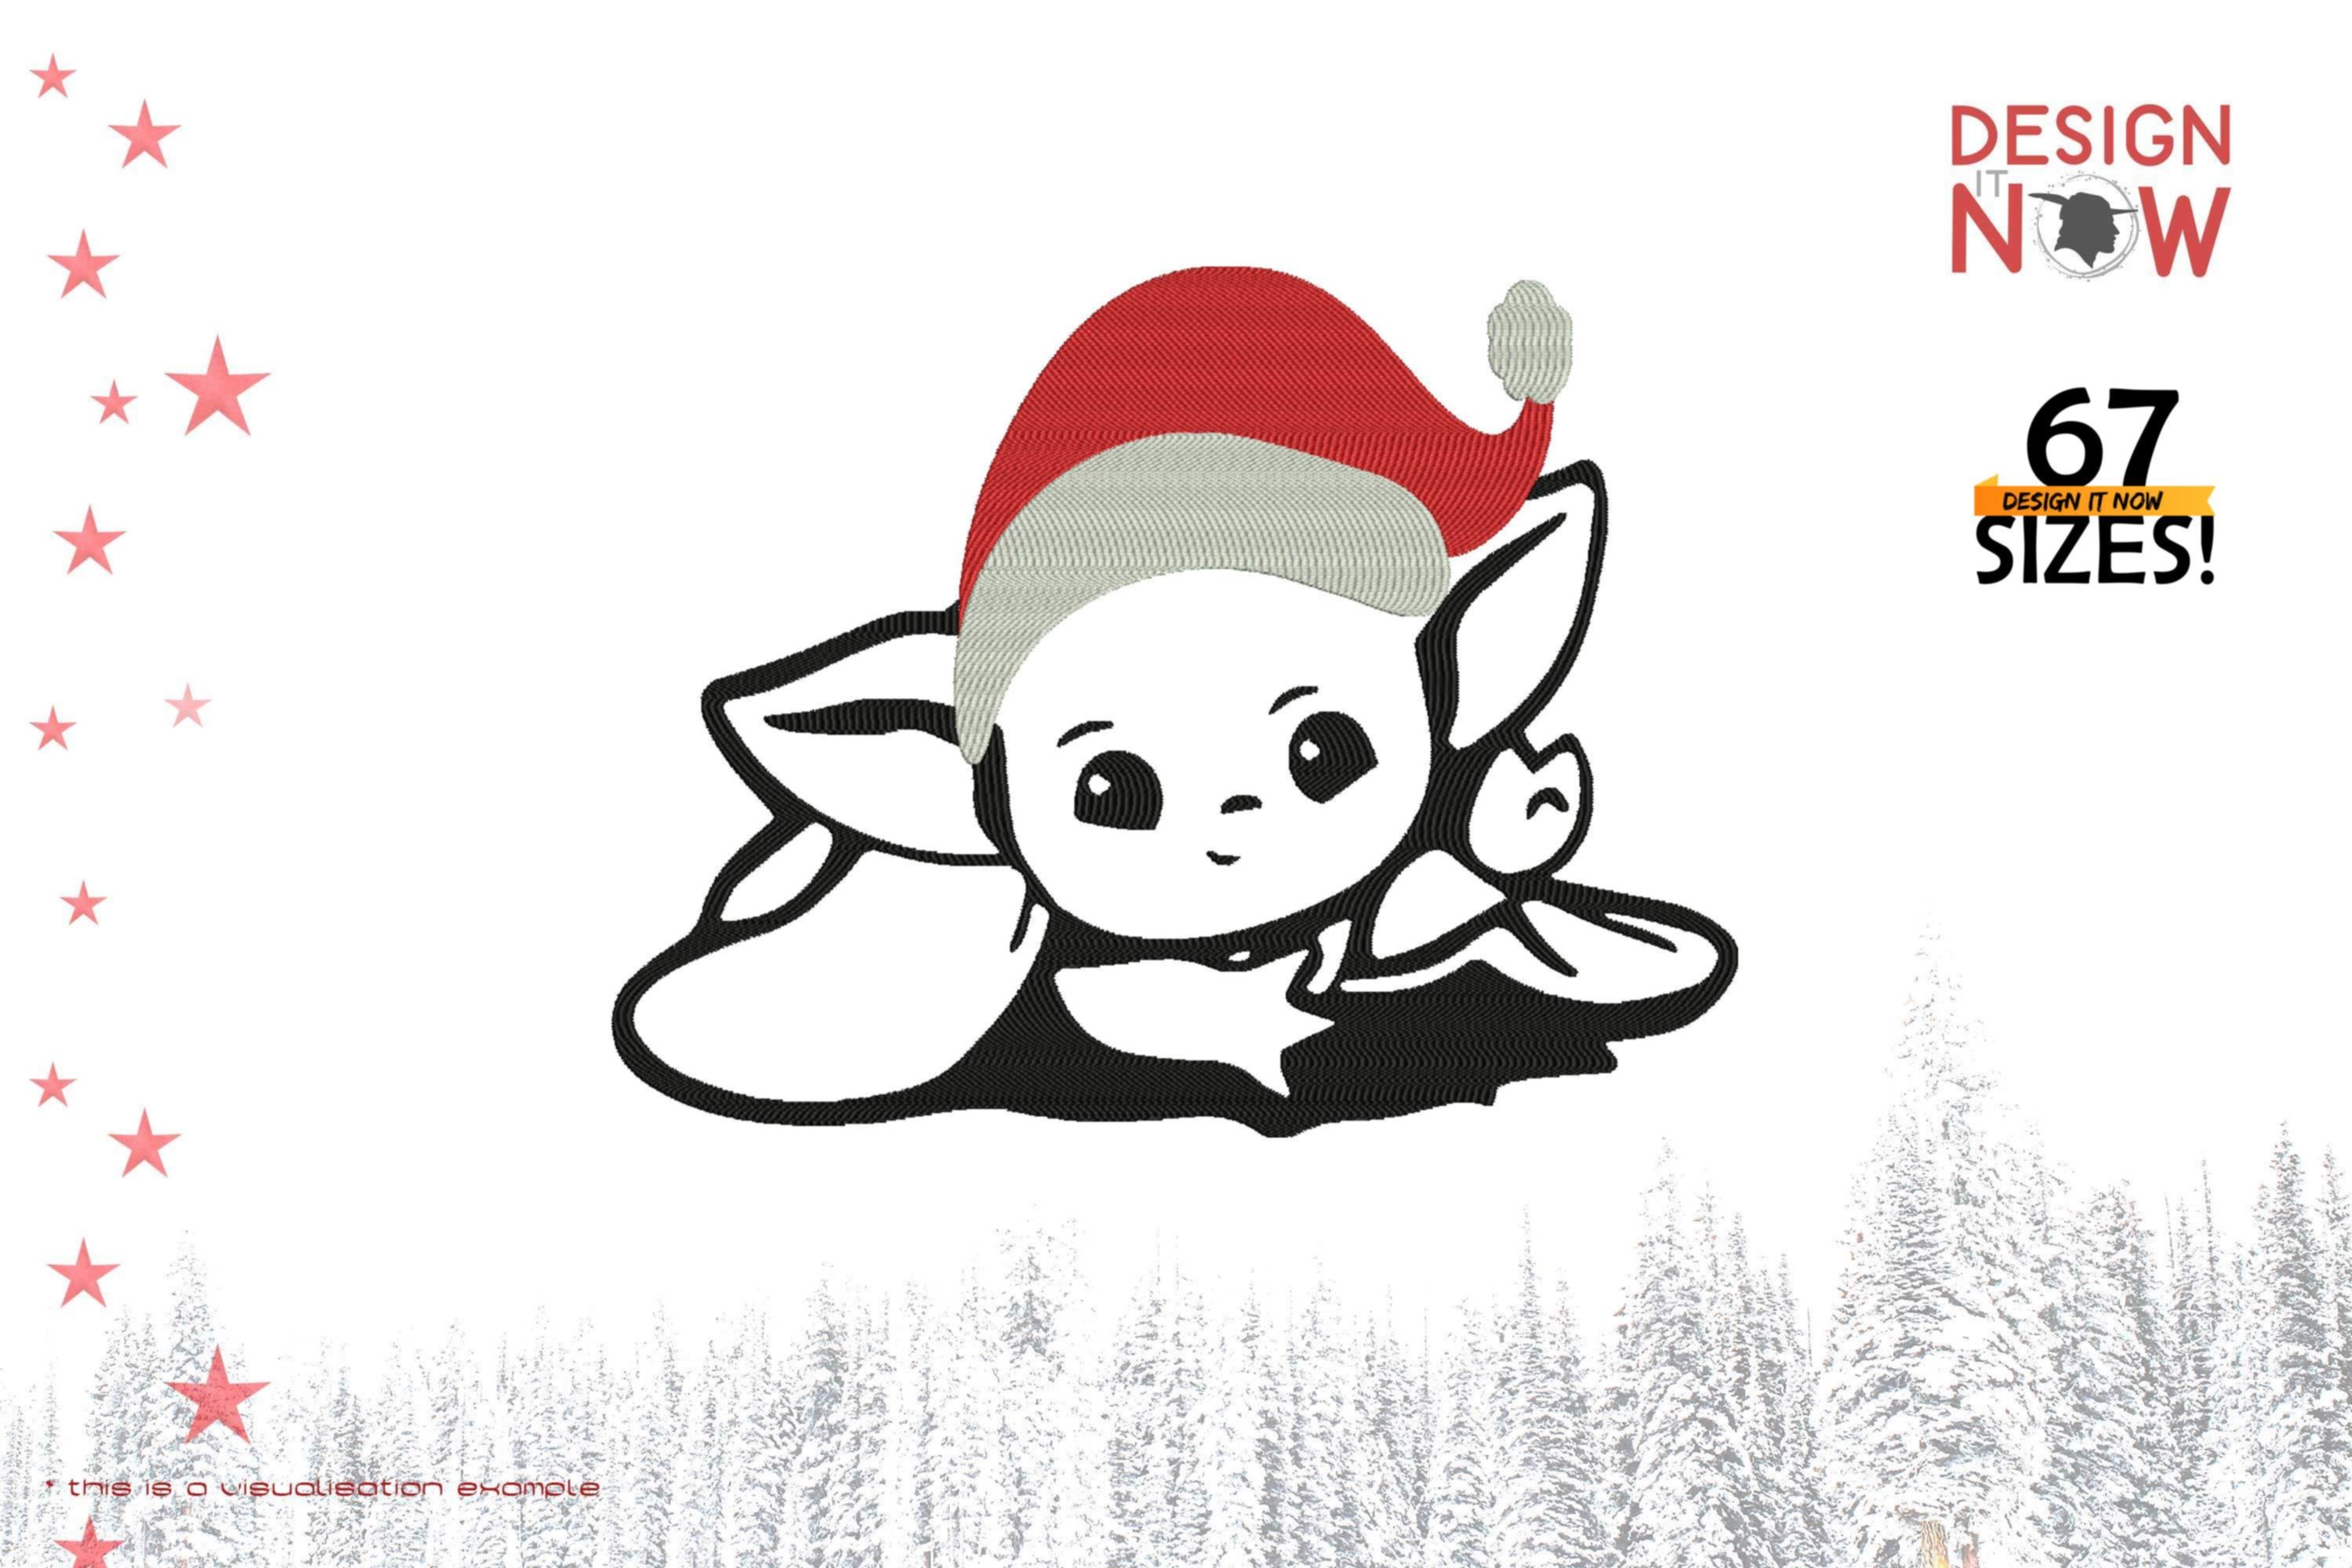 Tribute To Fictional Character Grogu aka Baby Yoda (Santa Claus Baby)